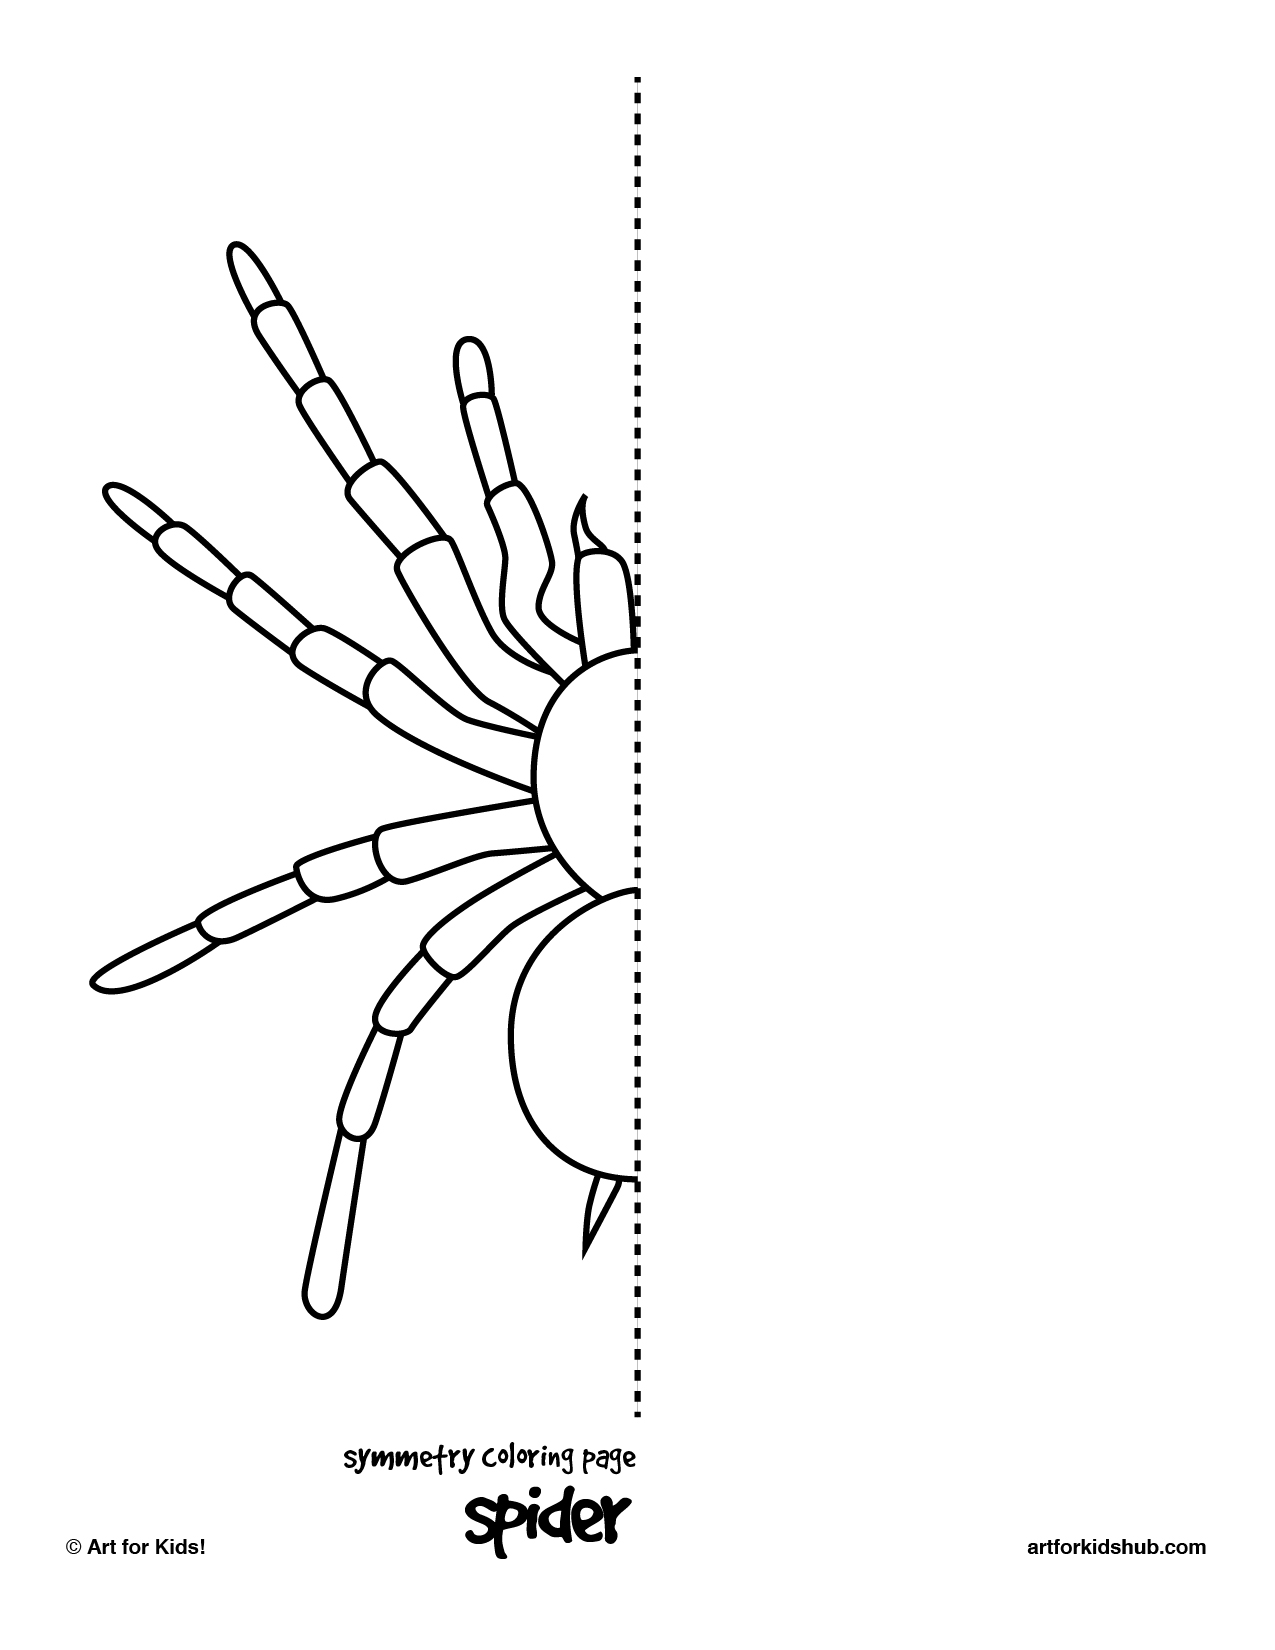 spider-symmetry